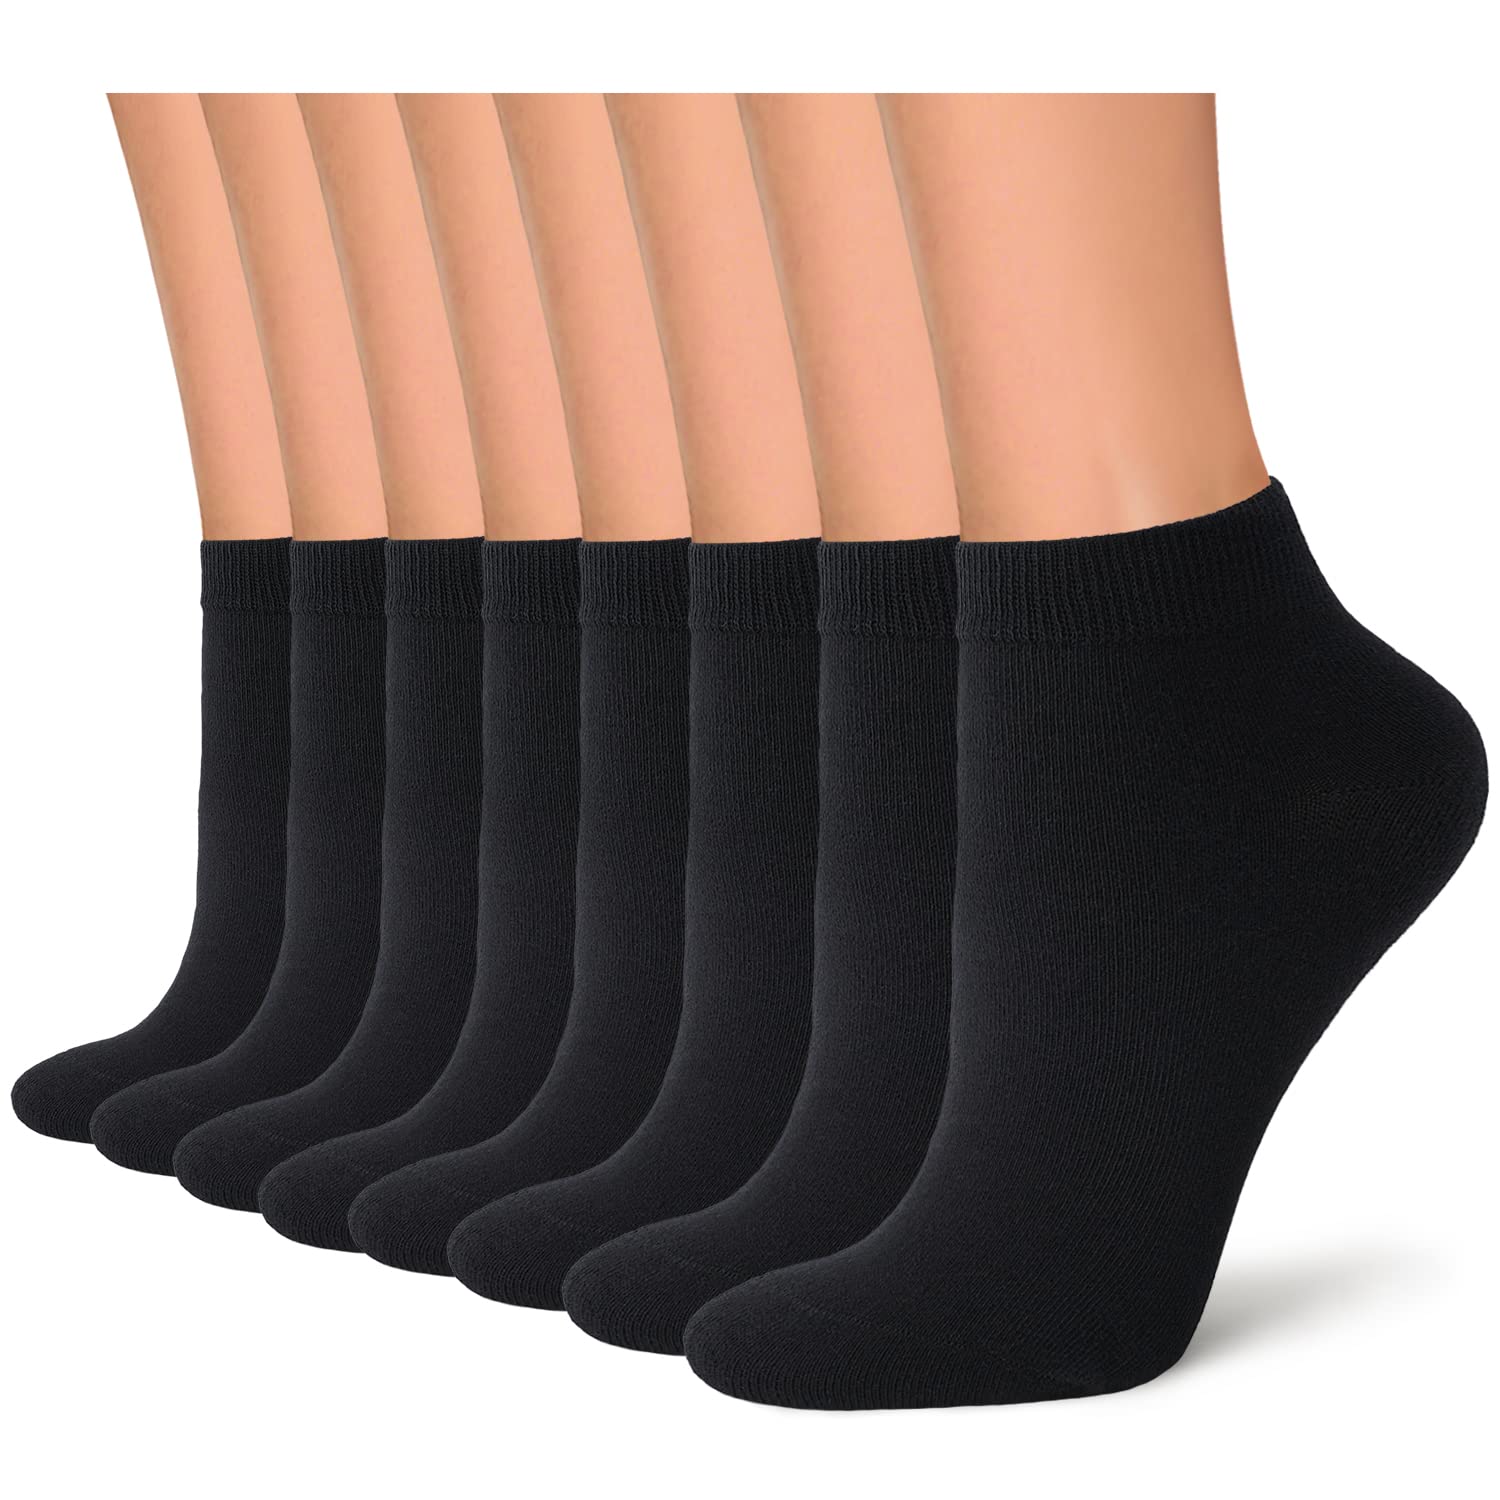 8 Pairs Ankle Socks for Women Cotton Socks Non Slip Classic No